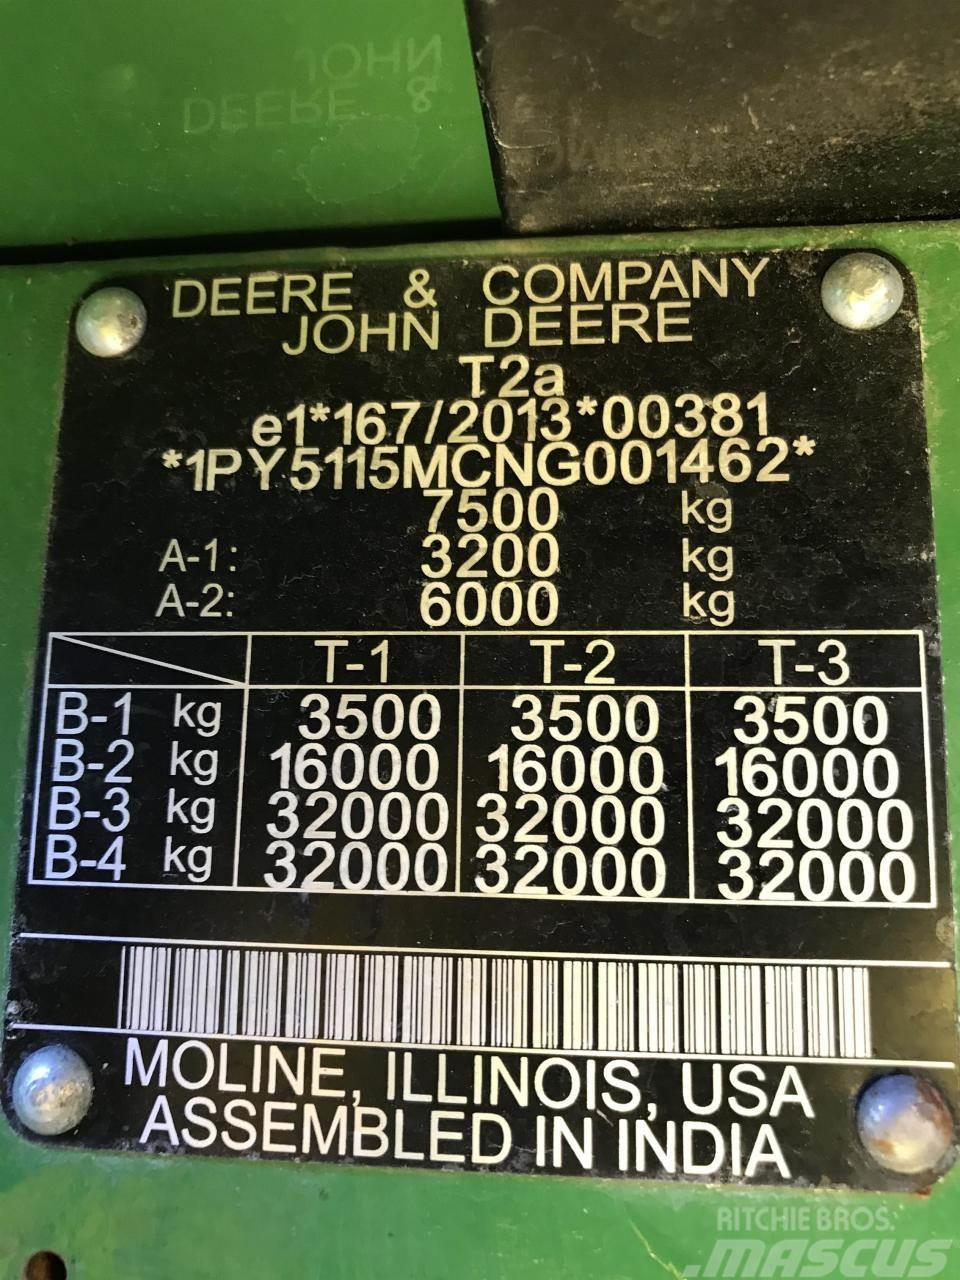 John Deere 5115M Traktori